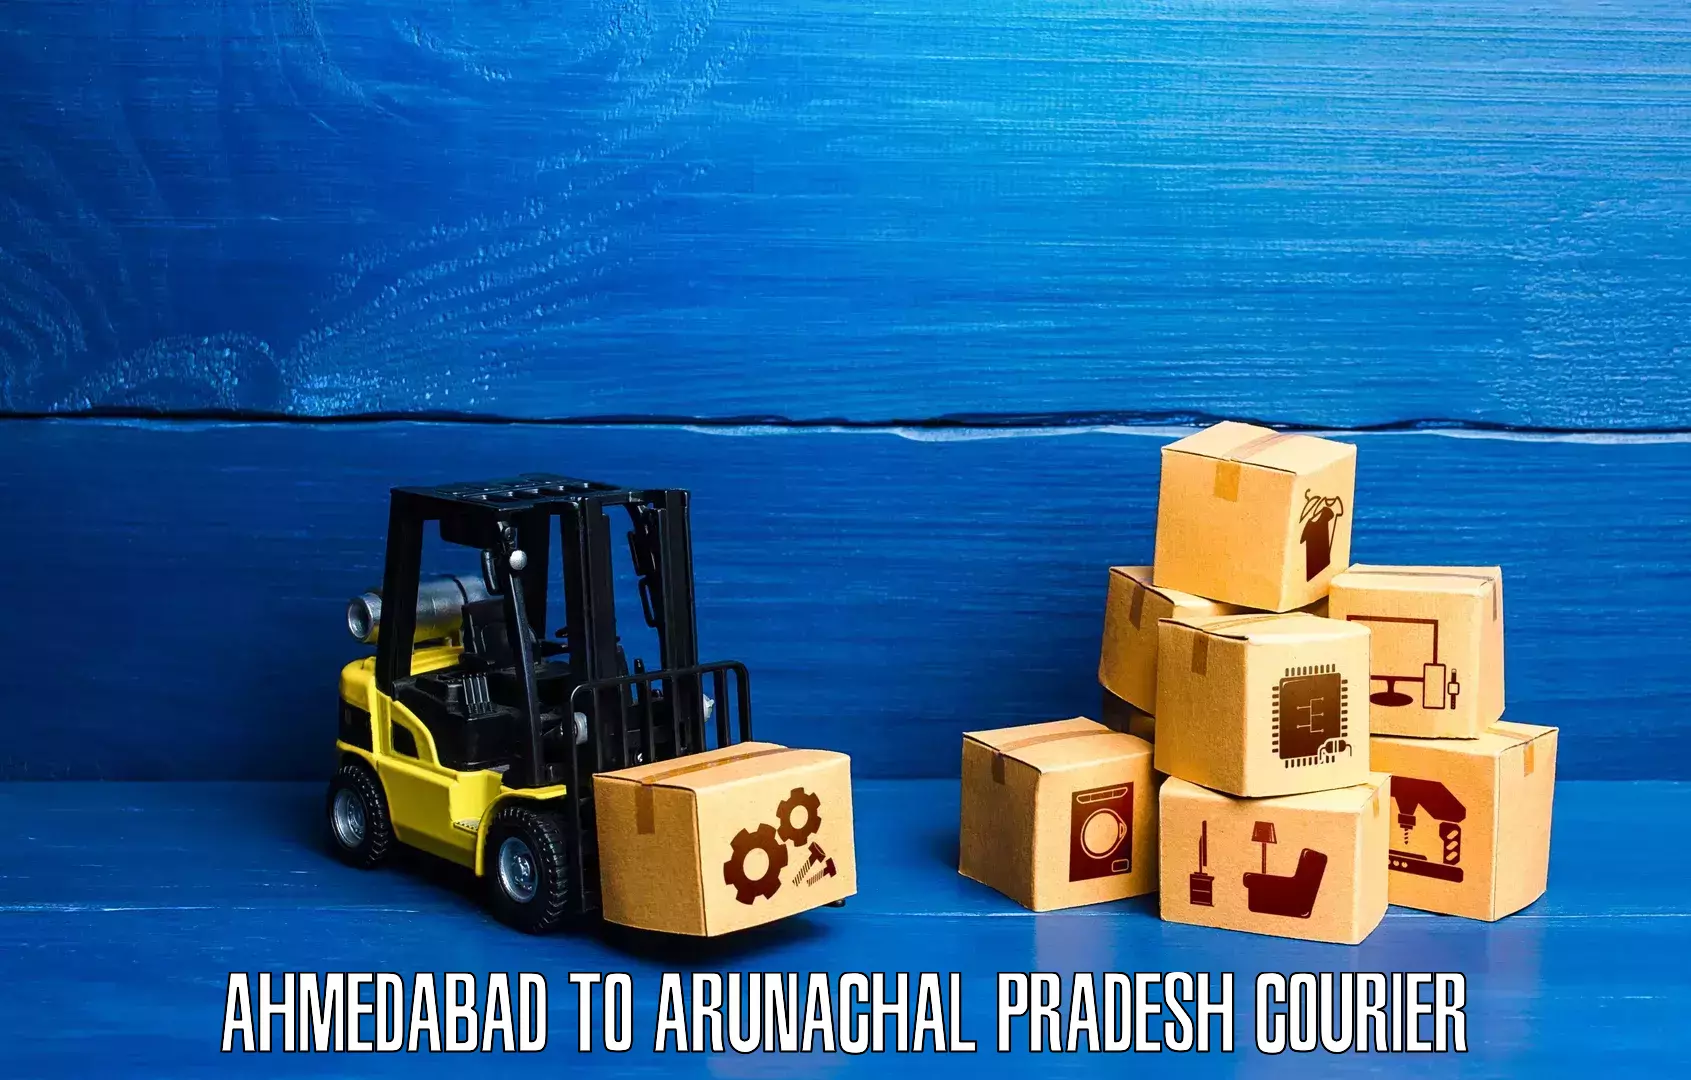 Global logistics network Ahmedabad to Kurung Kumey